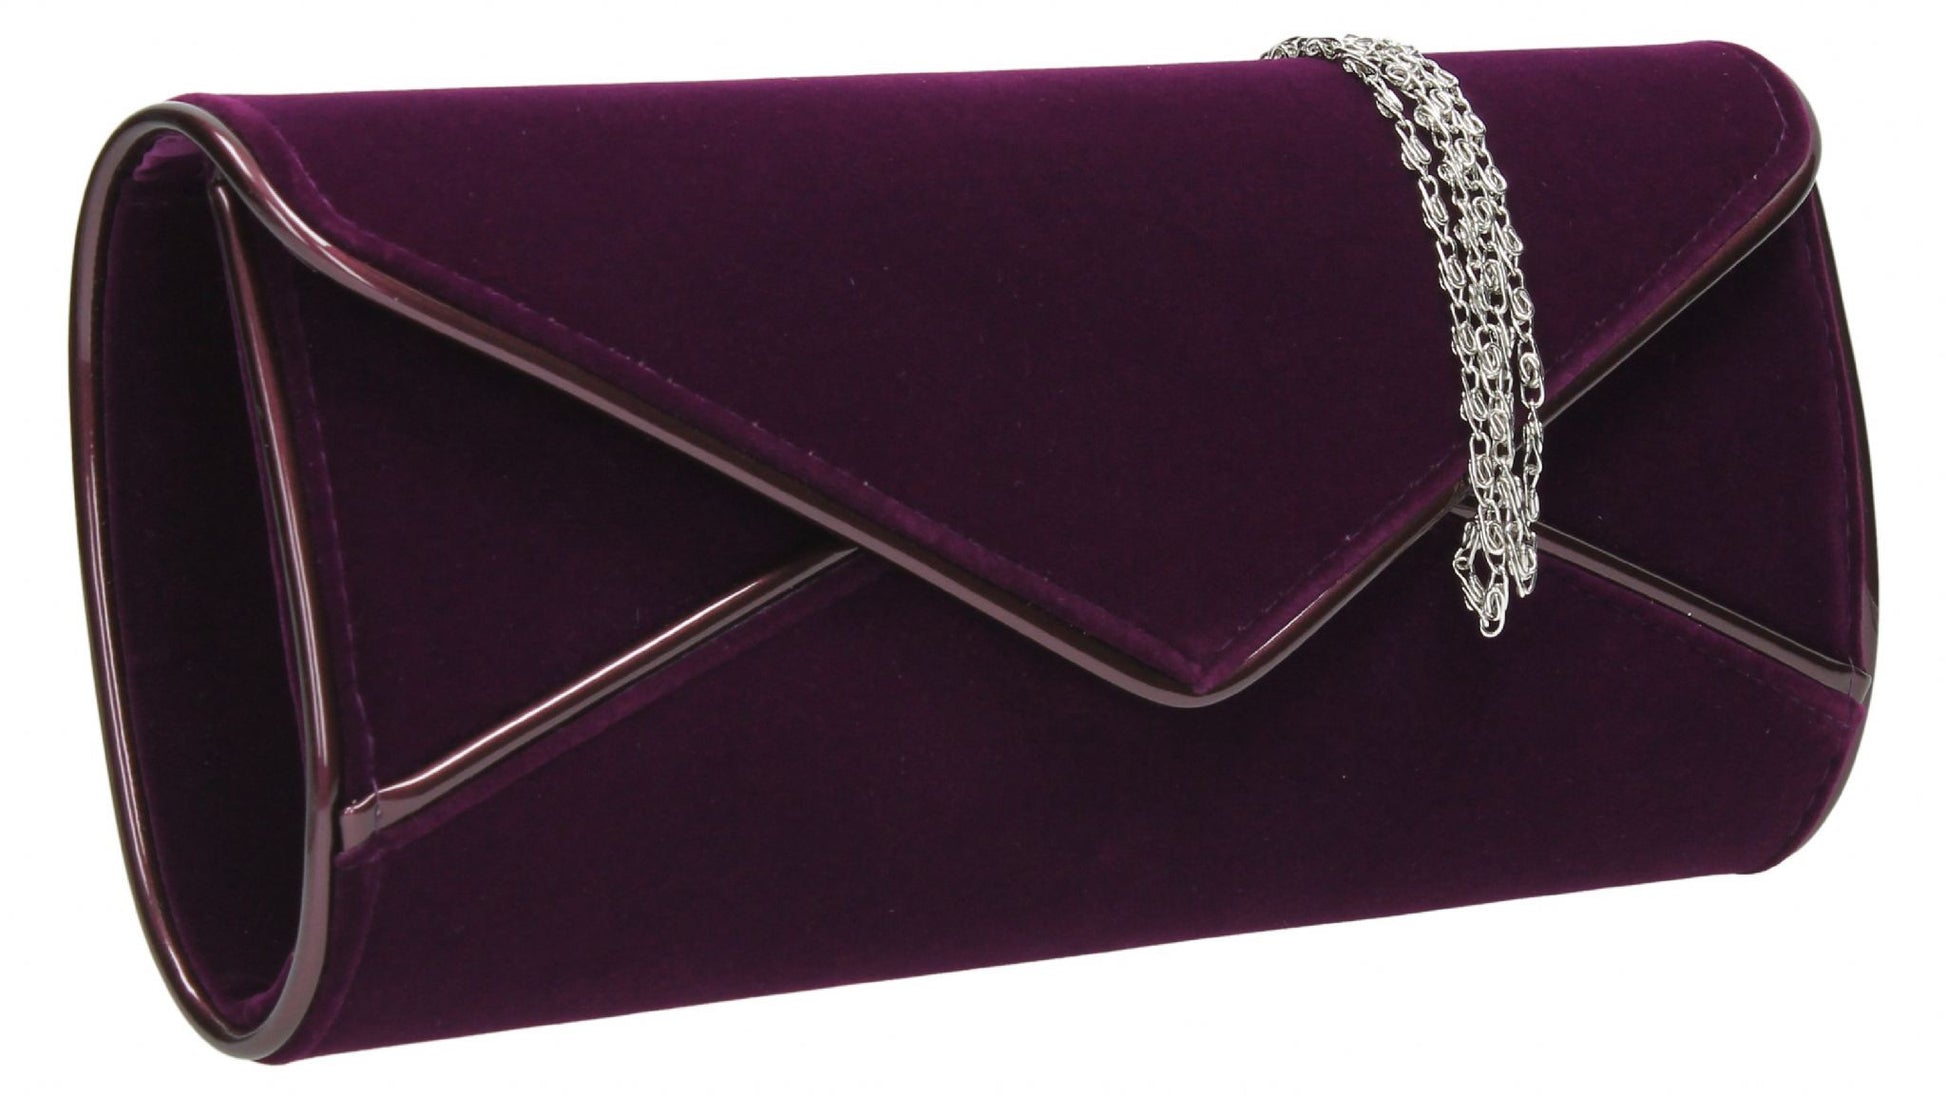 SWANKYSWANS Perry Velvet Clutch Bag - Purple Cute Cheap Clutch Bag For Weddings School and Work